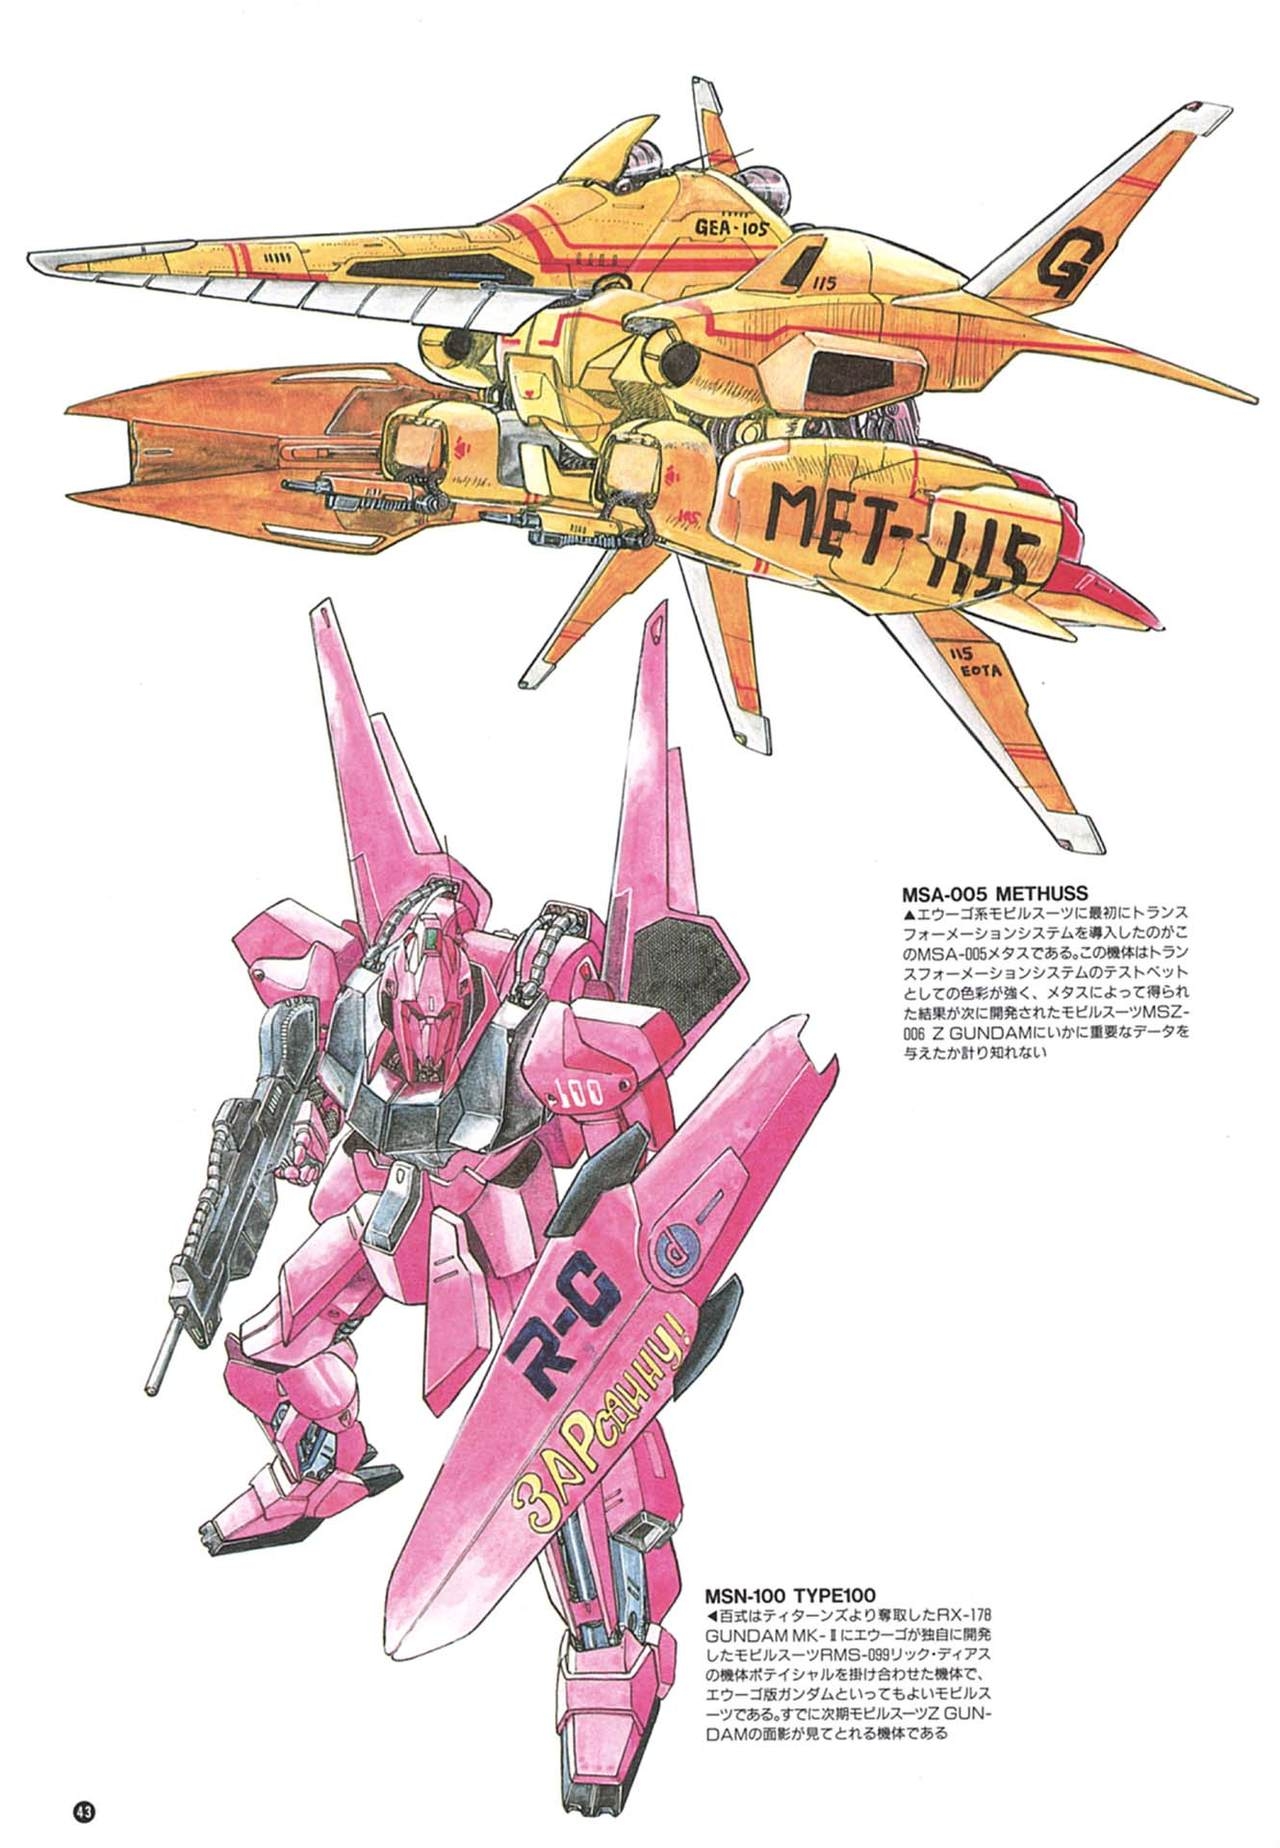 [Kazuhisa Kondo] Kazuhisa Kondo 2D & 3D Works - Go Ahead - From Mobile Suit Gundam to Original Mechanism 42